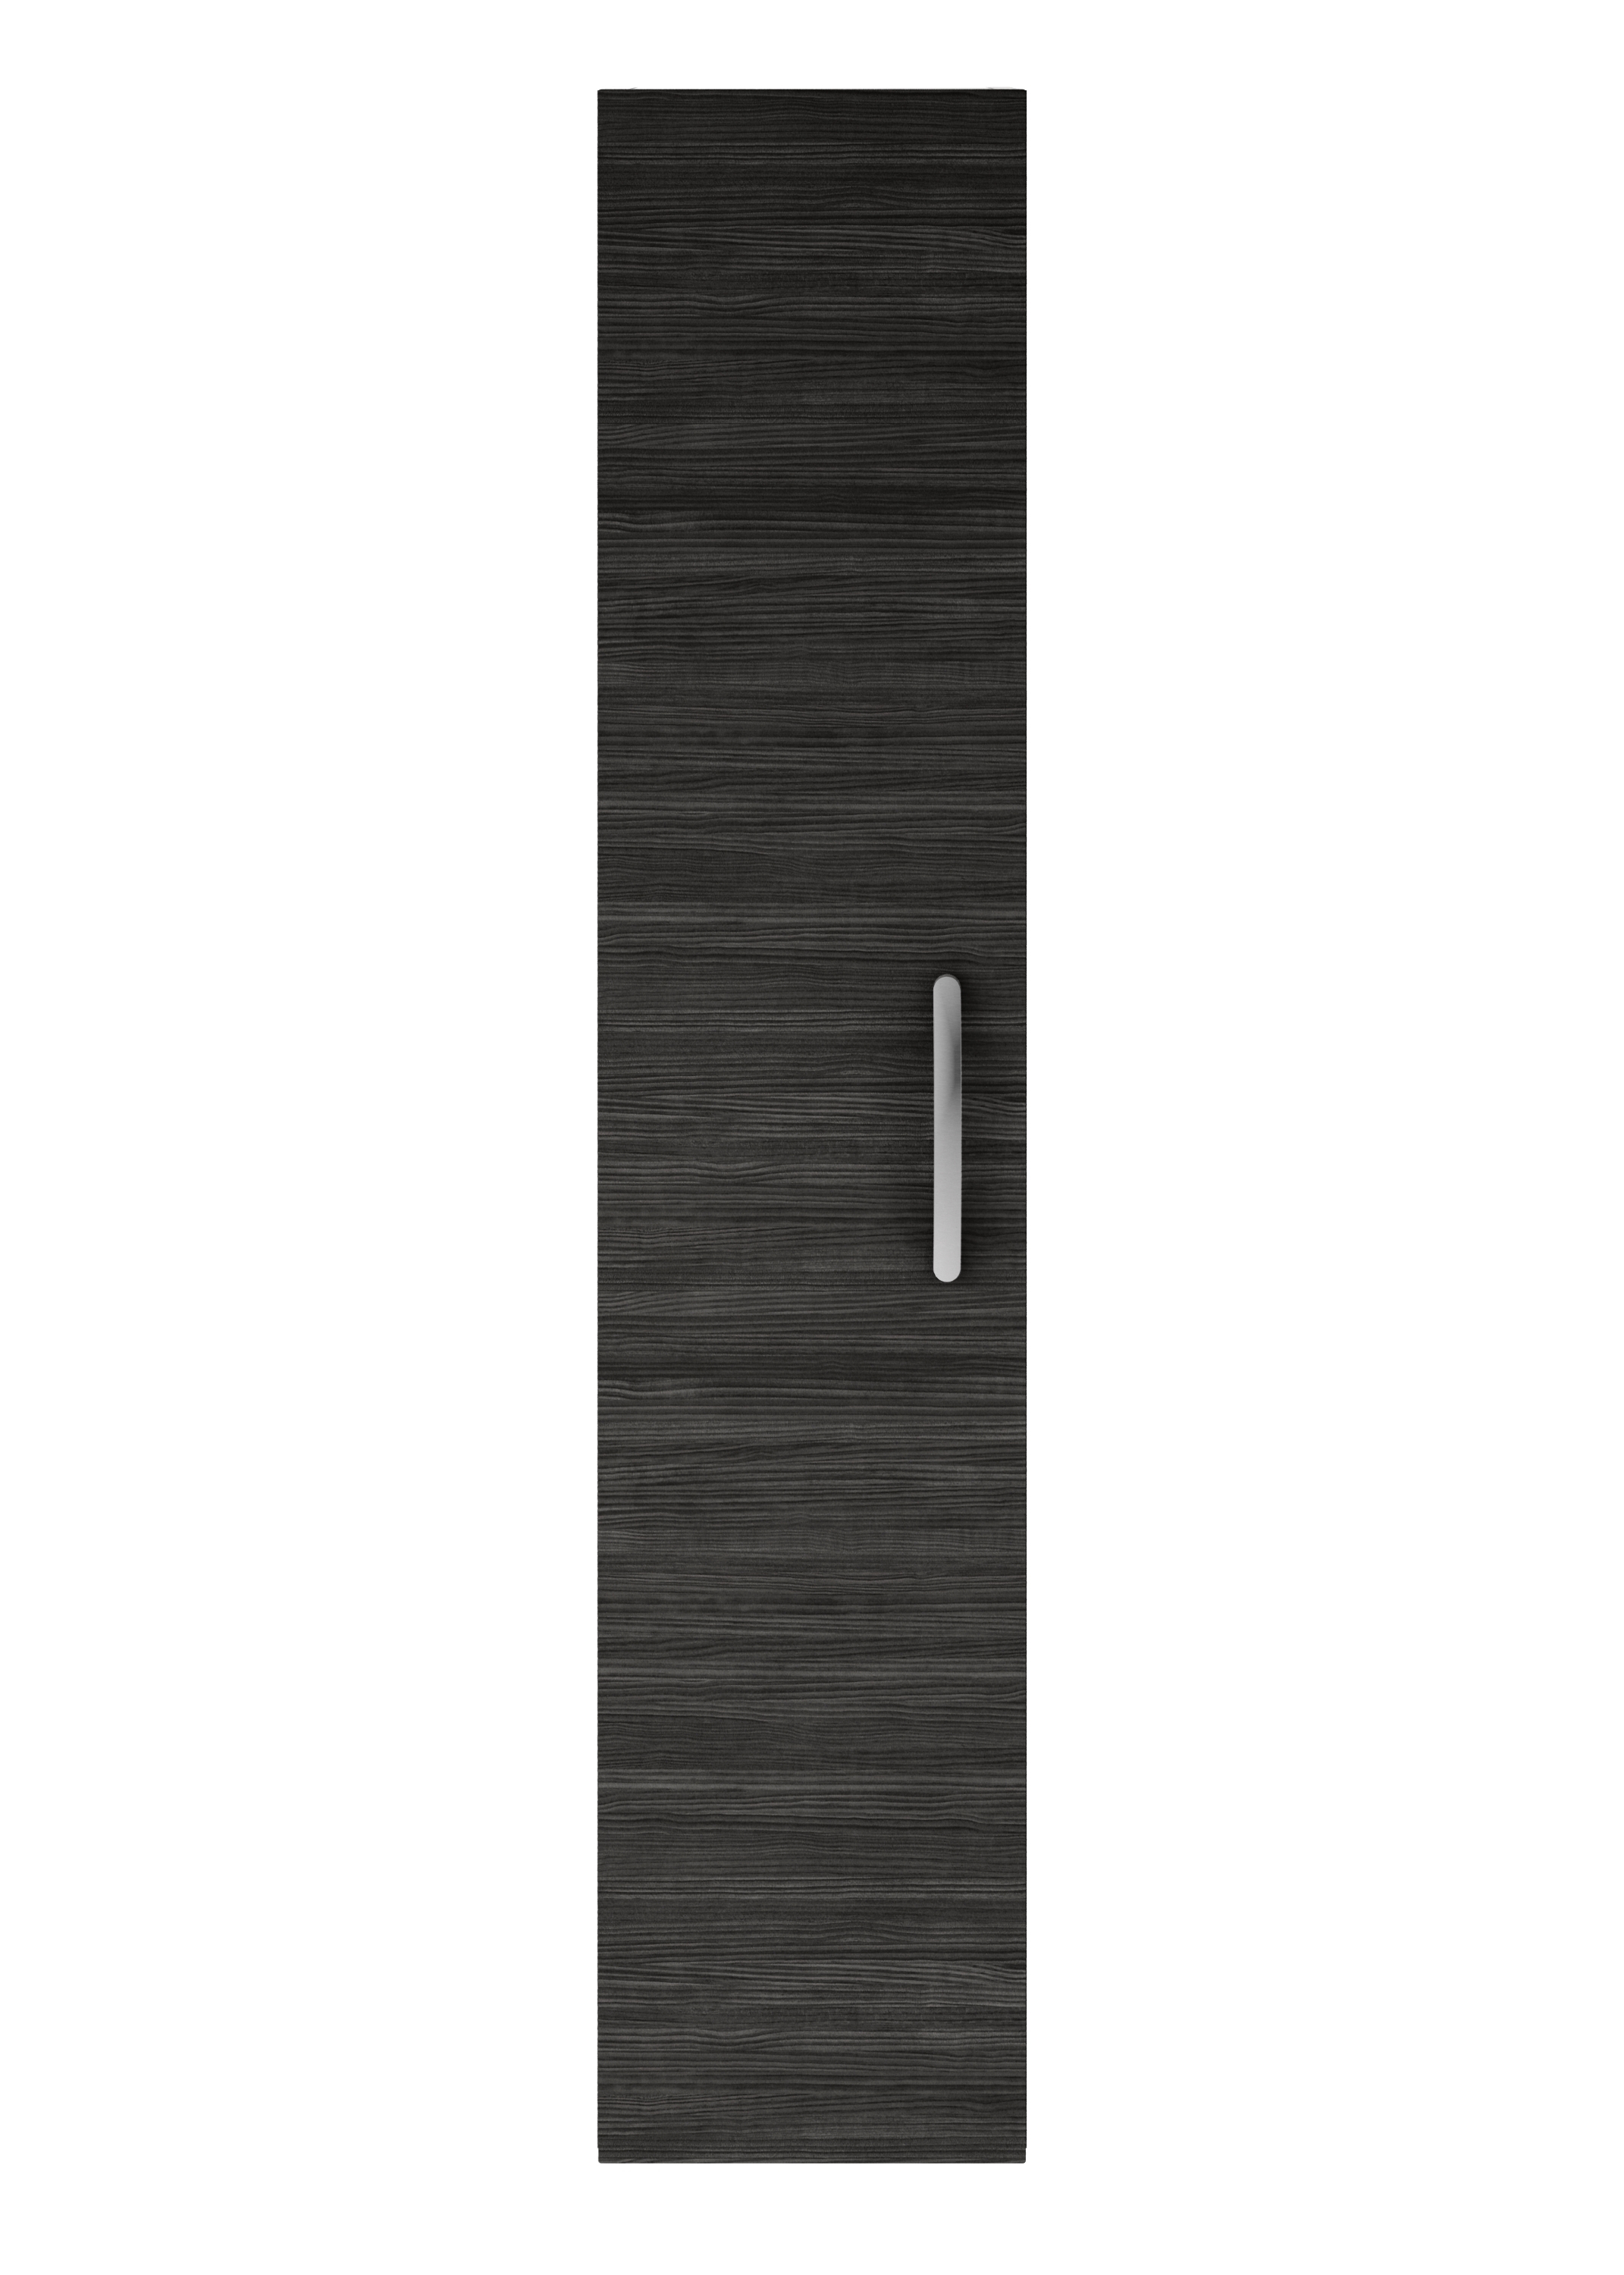 Nuie Athena 1-Door Wall Hung Tall Unit 300mm Wide - Hacienda Black- MOD661 